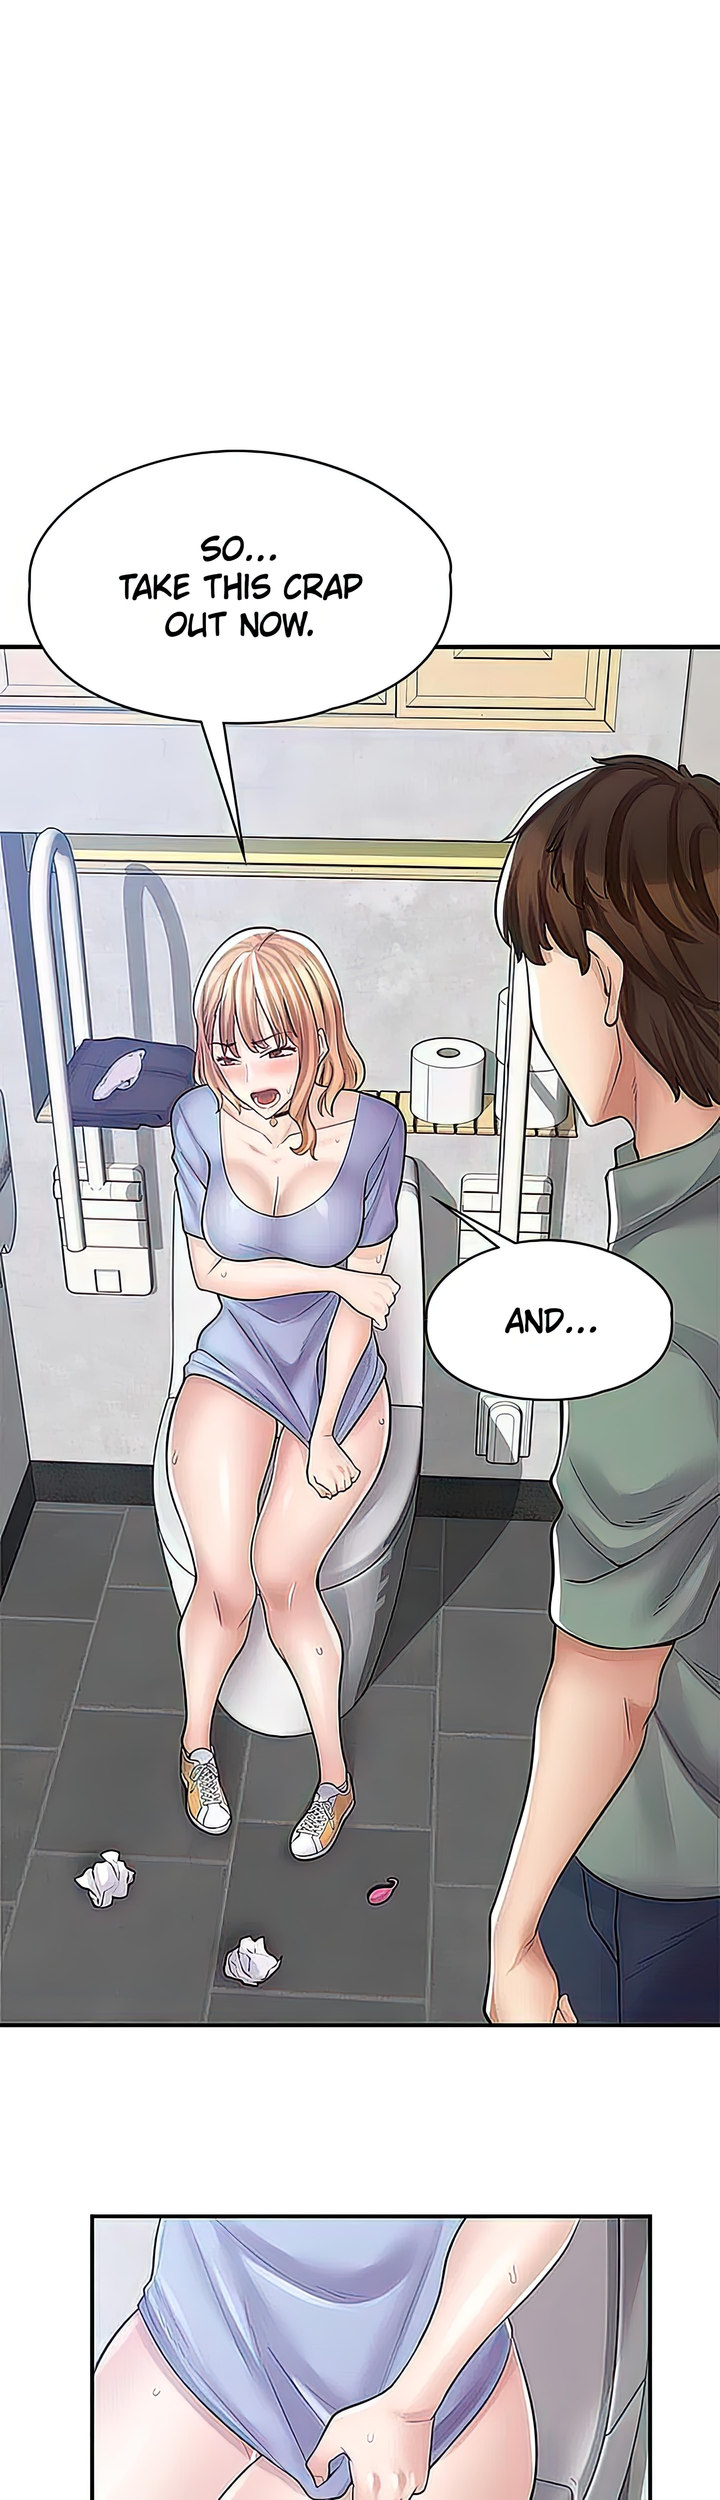 Erotic Manga Café Girls - Chapter 9 Page 1